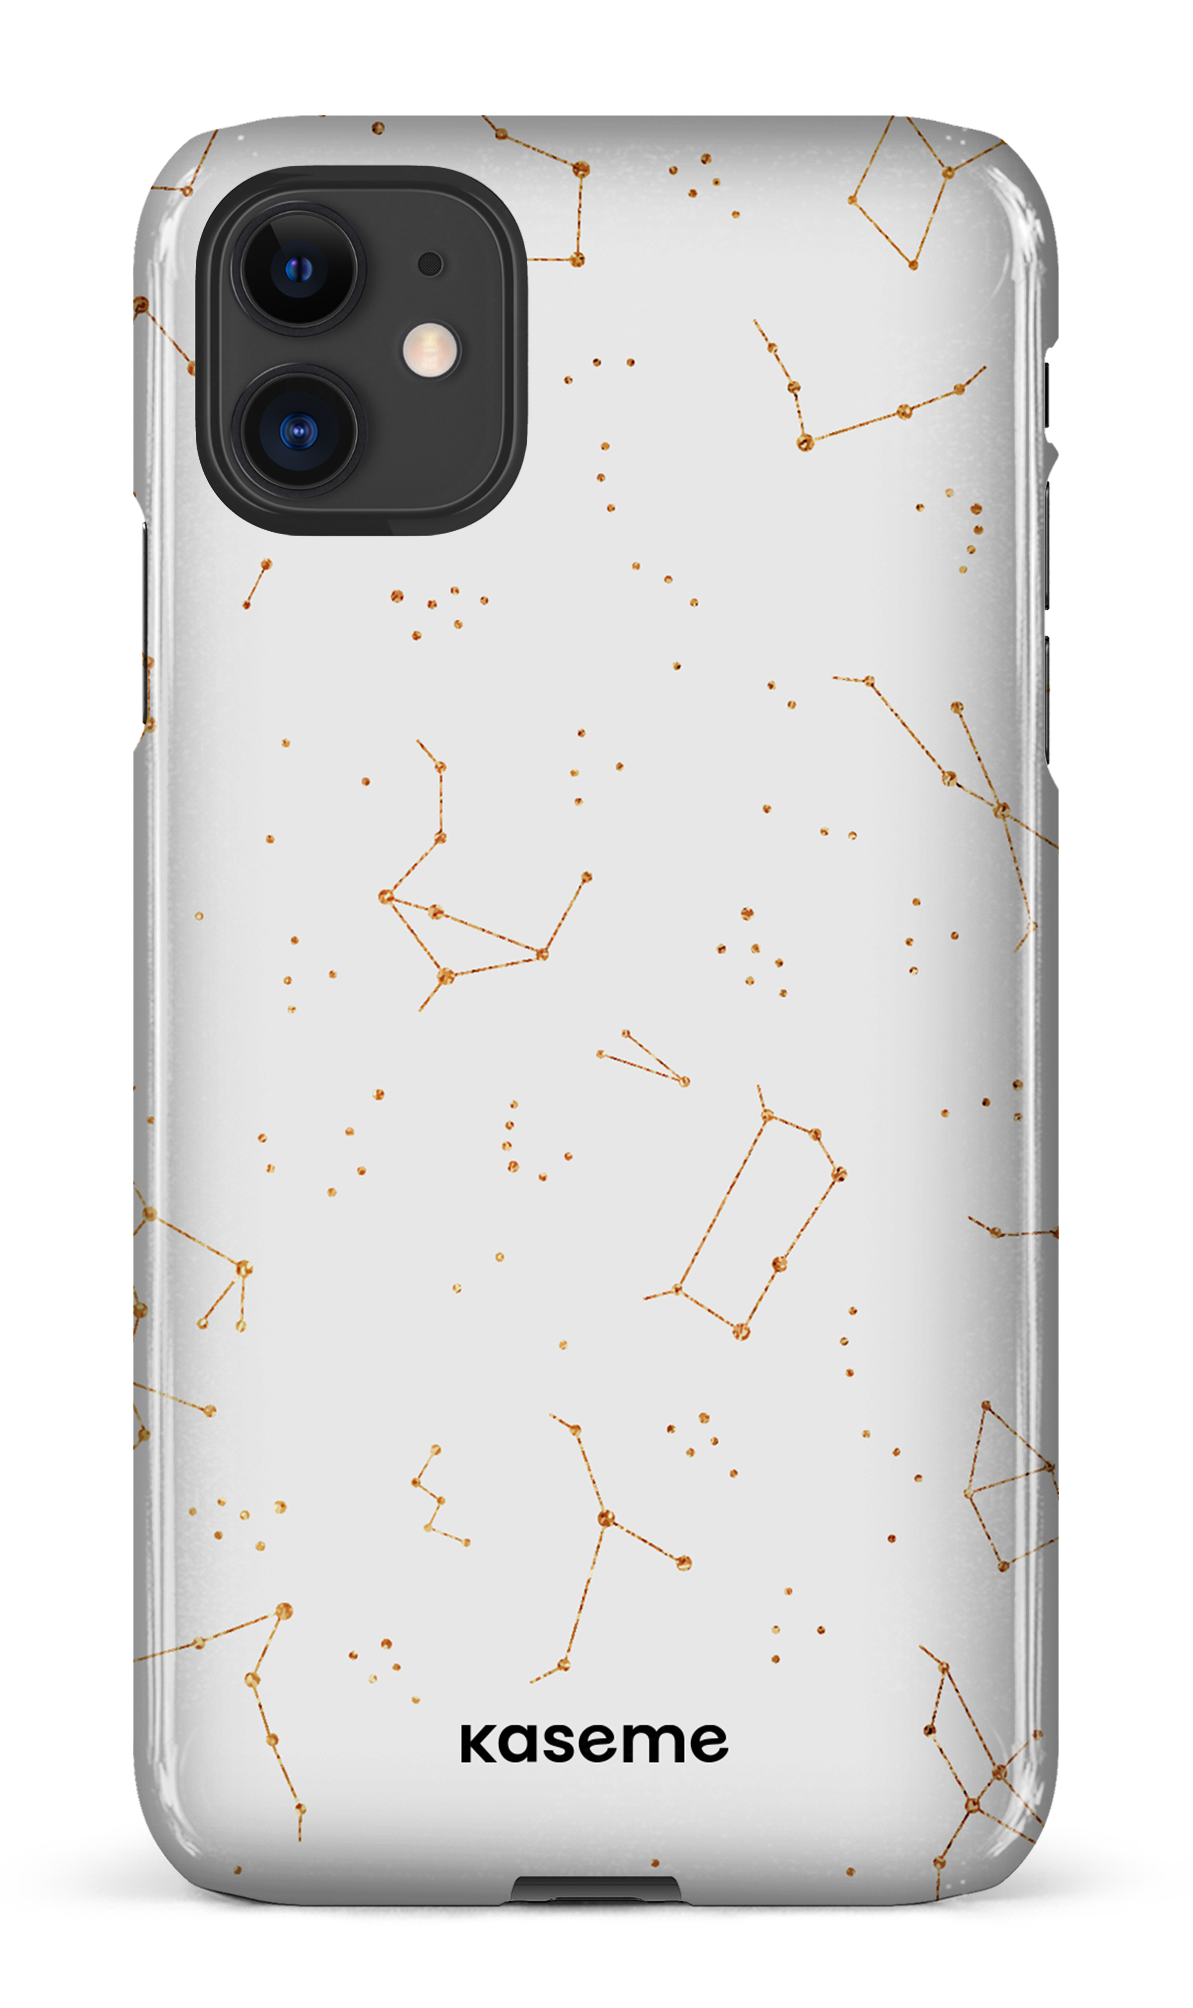 Stardust sky - iPhone 11